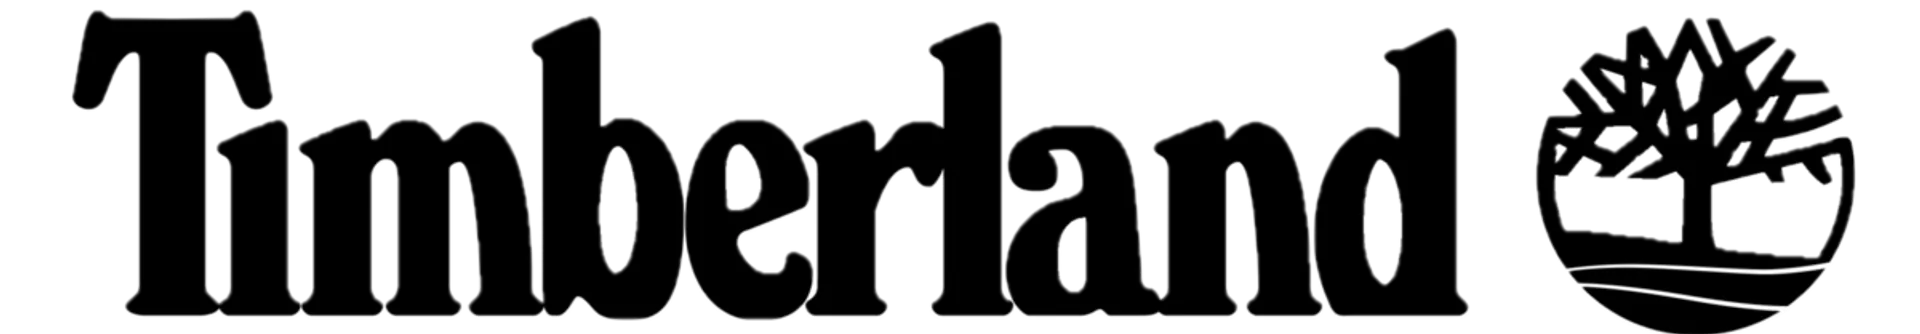 TIMBERLAND logo die aktuell Flugblatt